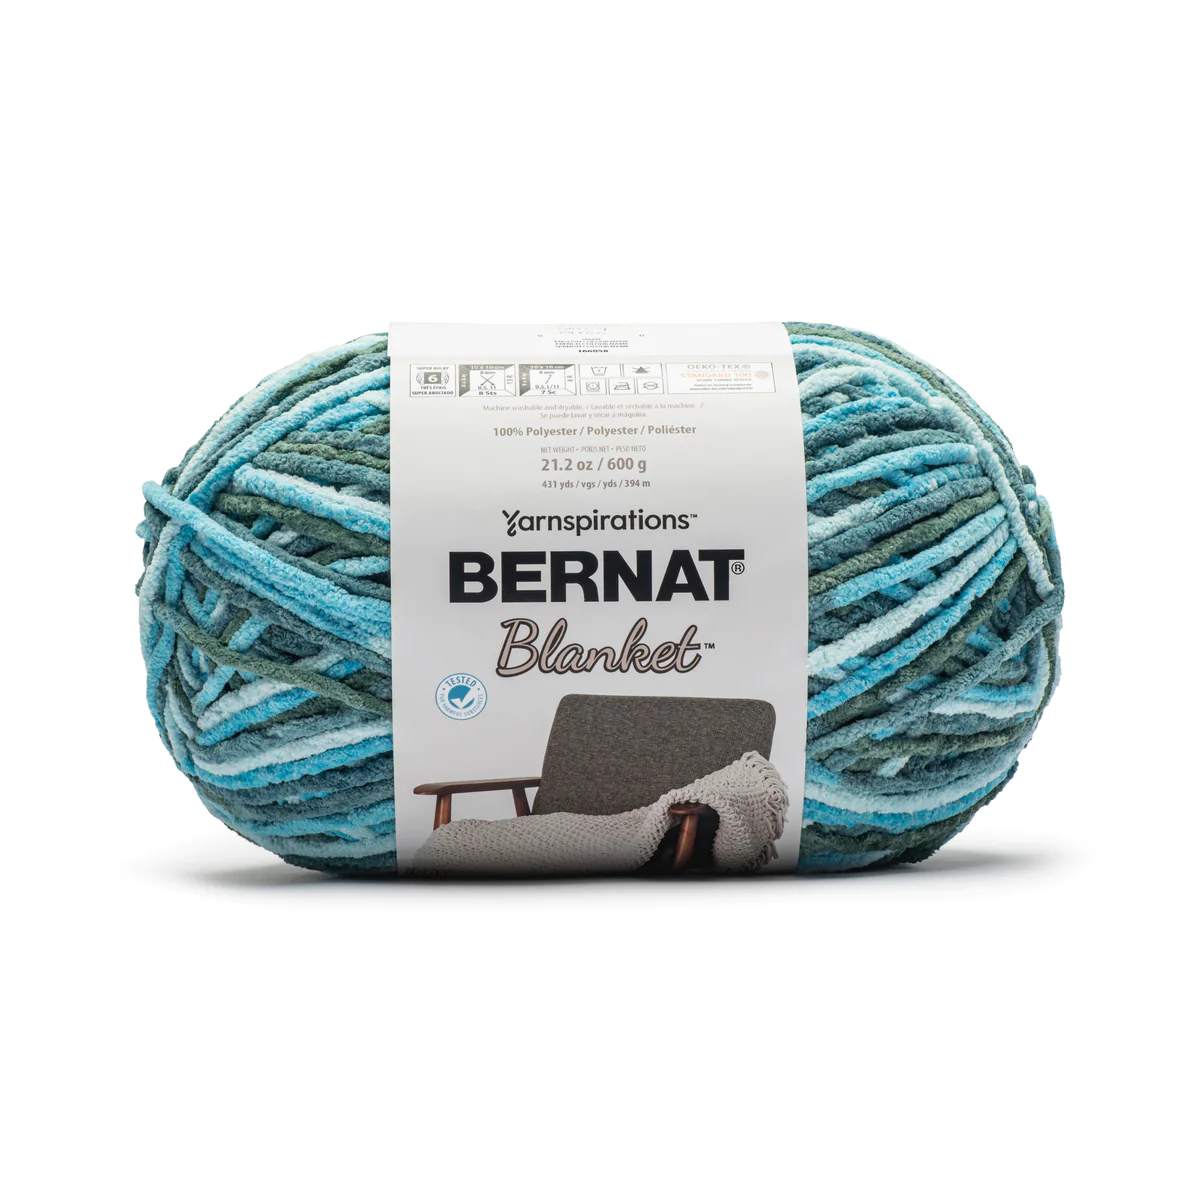 Bernat Blanket 600 gram / 21.1 oz Format in Stormy Ocean Colour